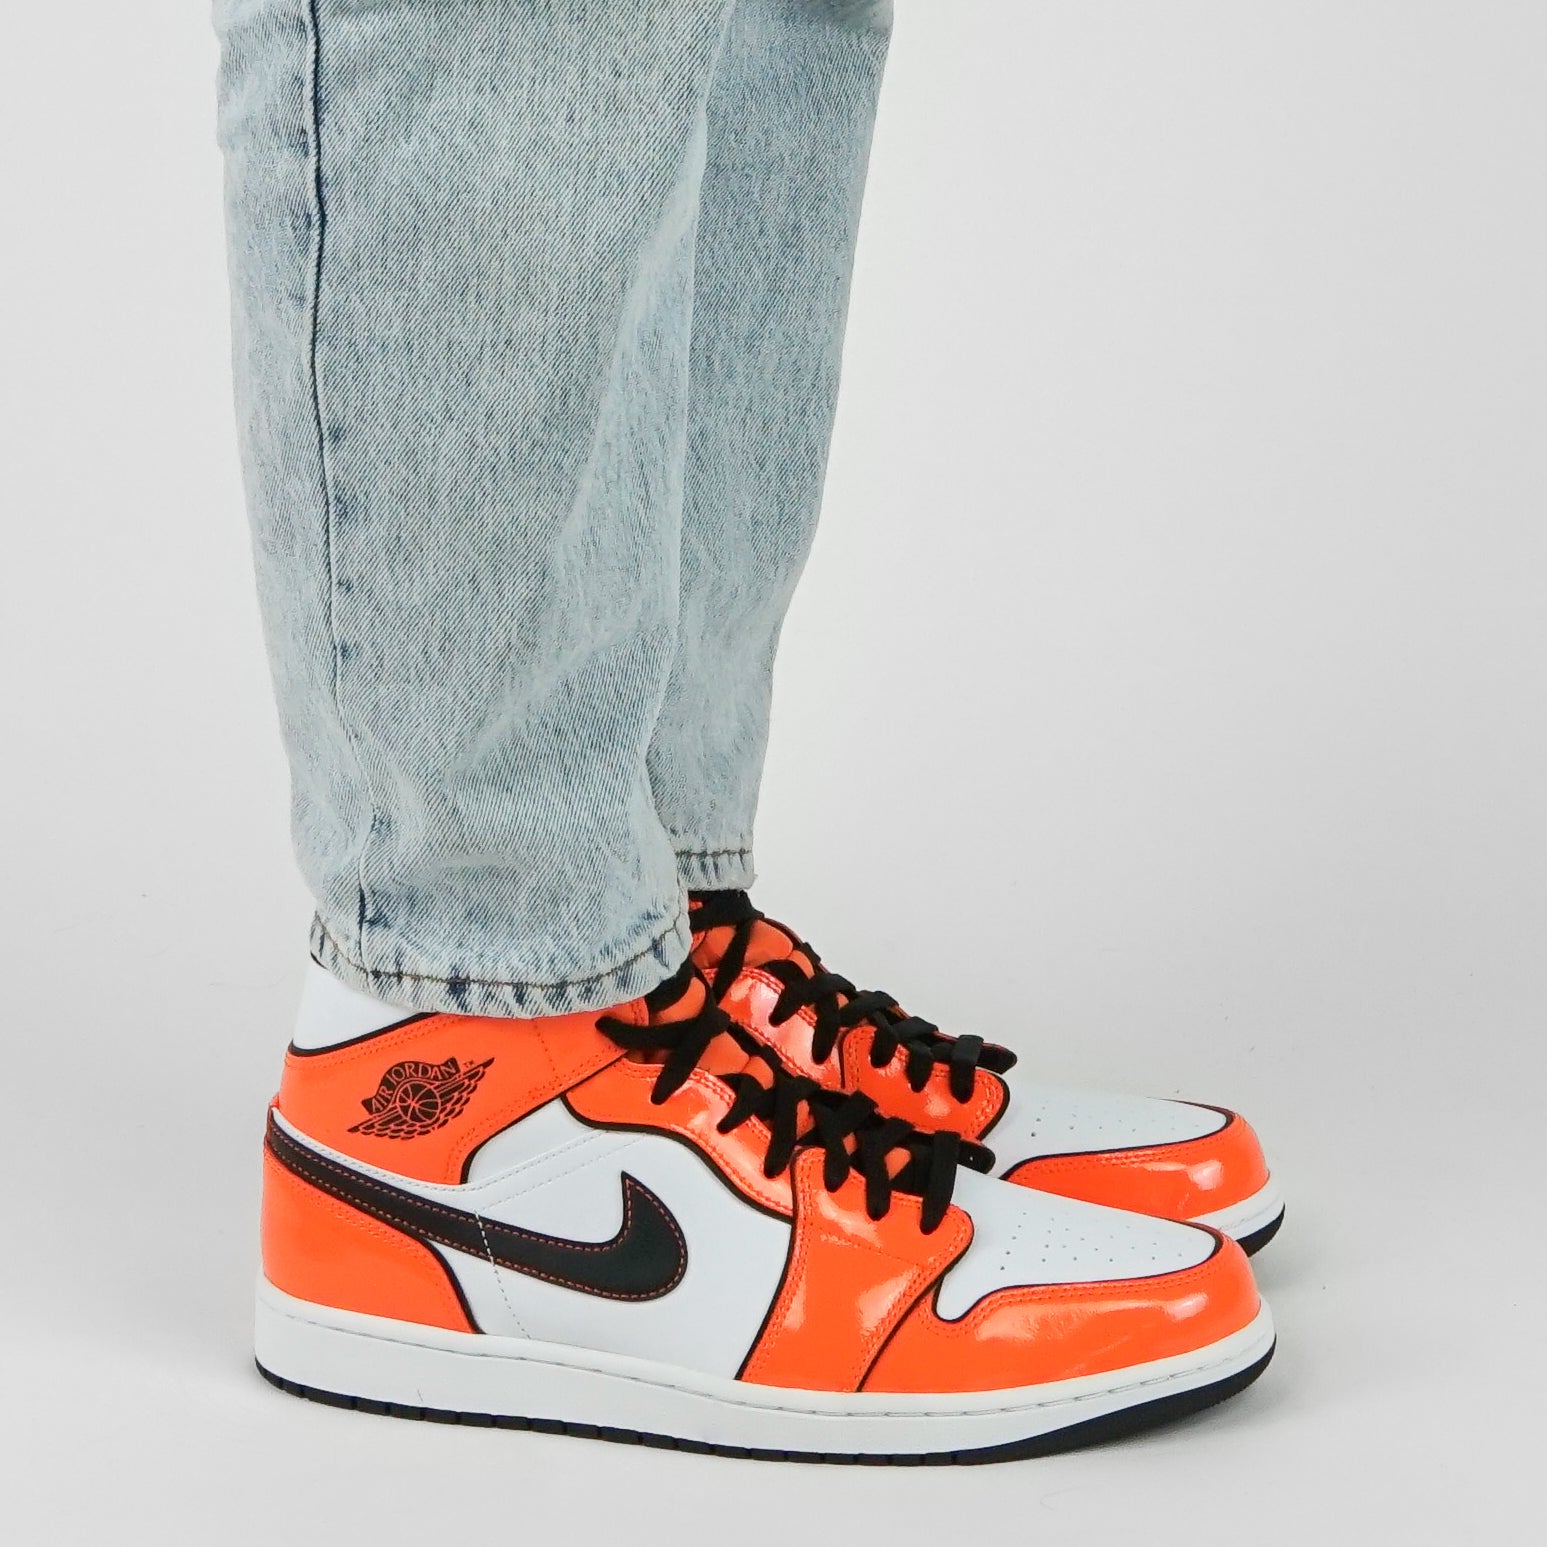 Nike Jordan 1 "Orange Turf" Mid - Jordan 1 | Trendiga kläder & skor - Merchsweden |